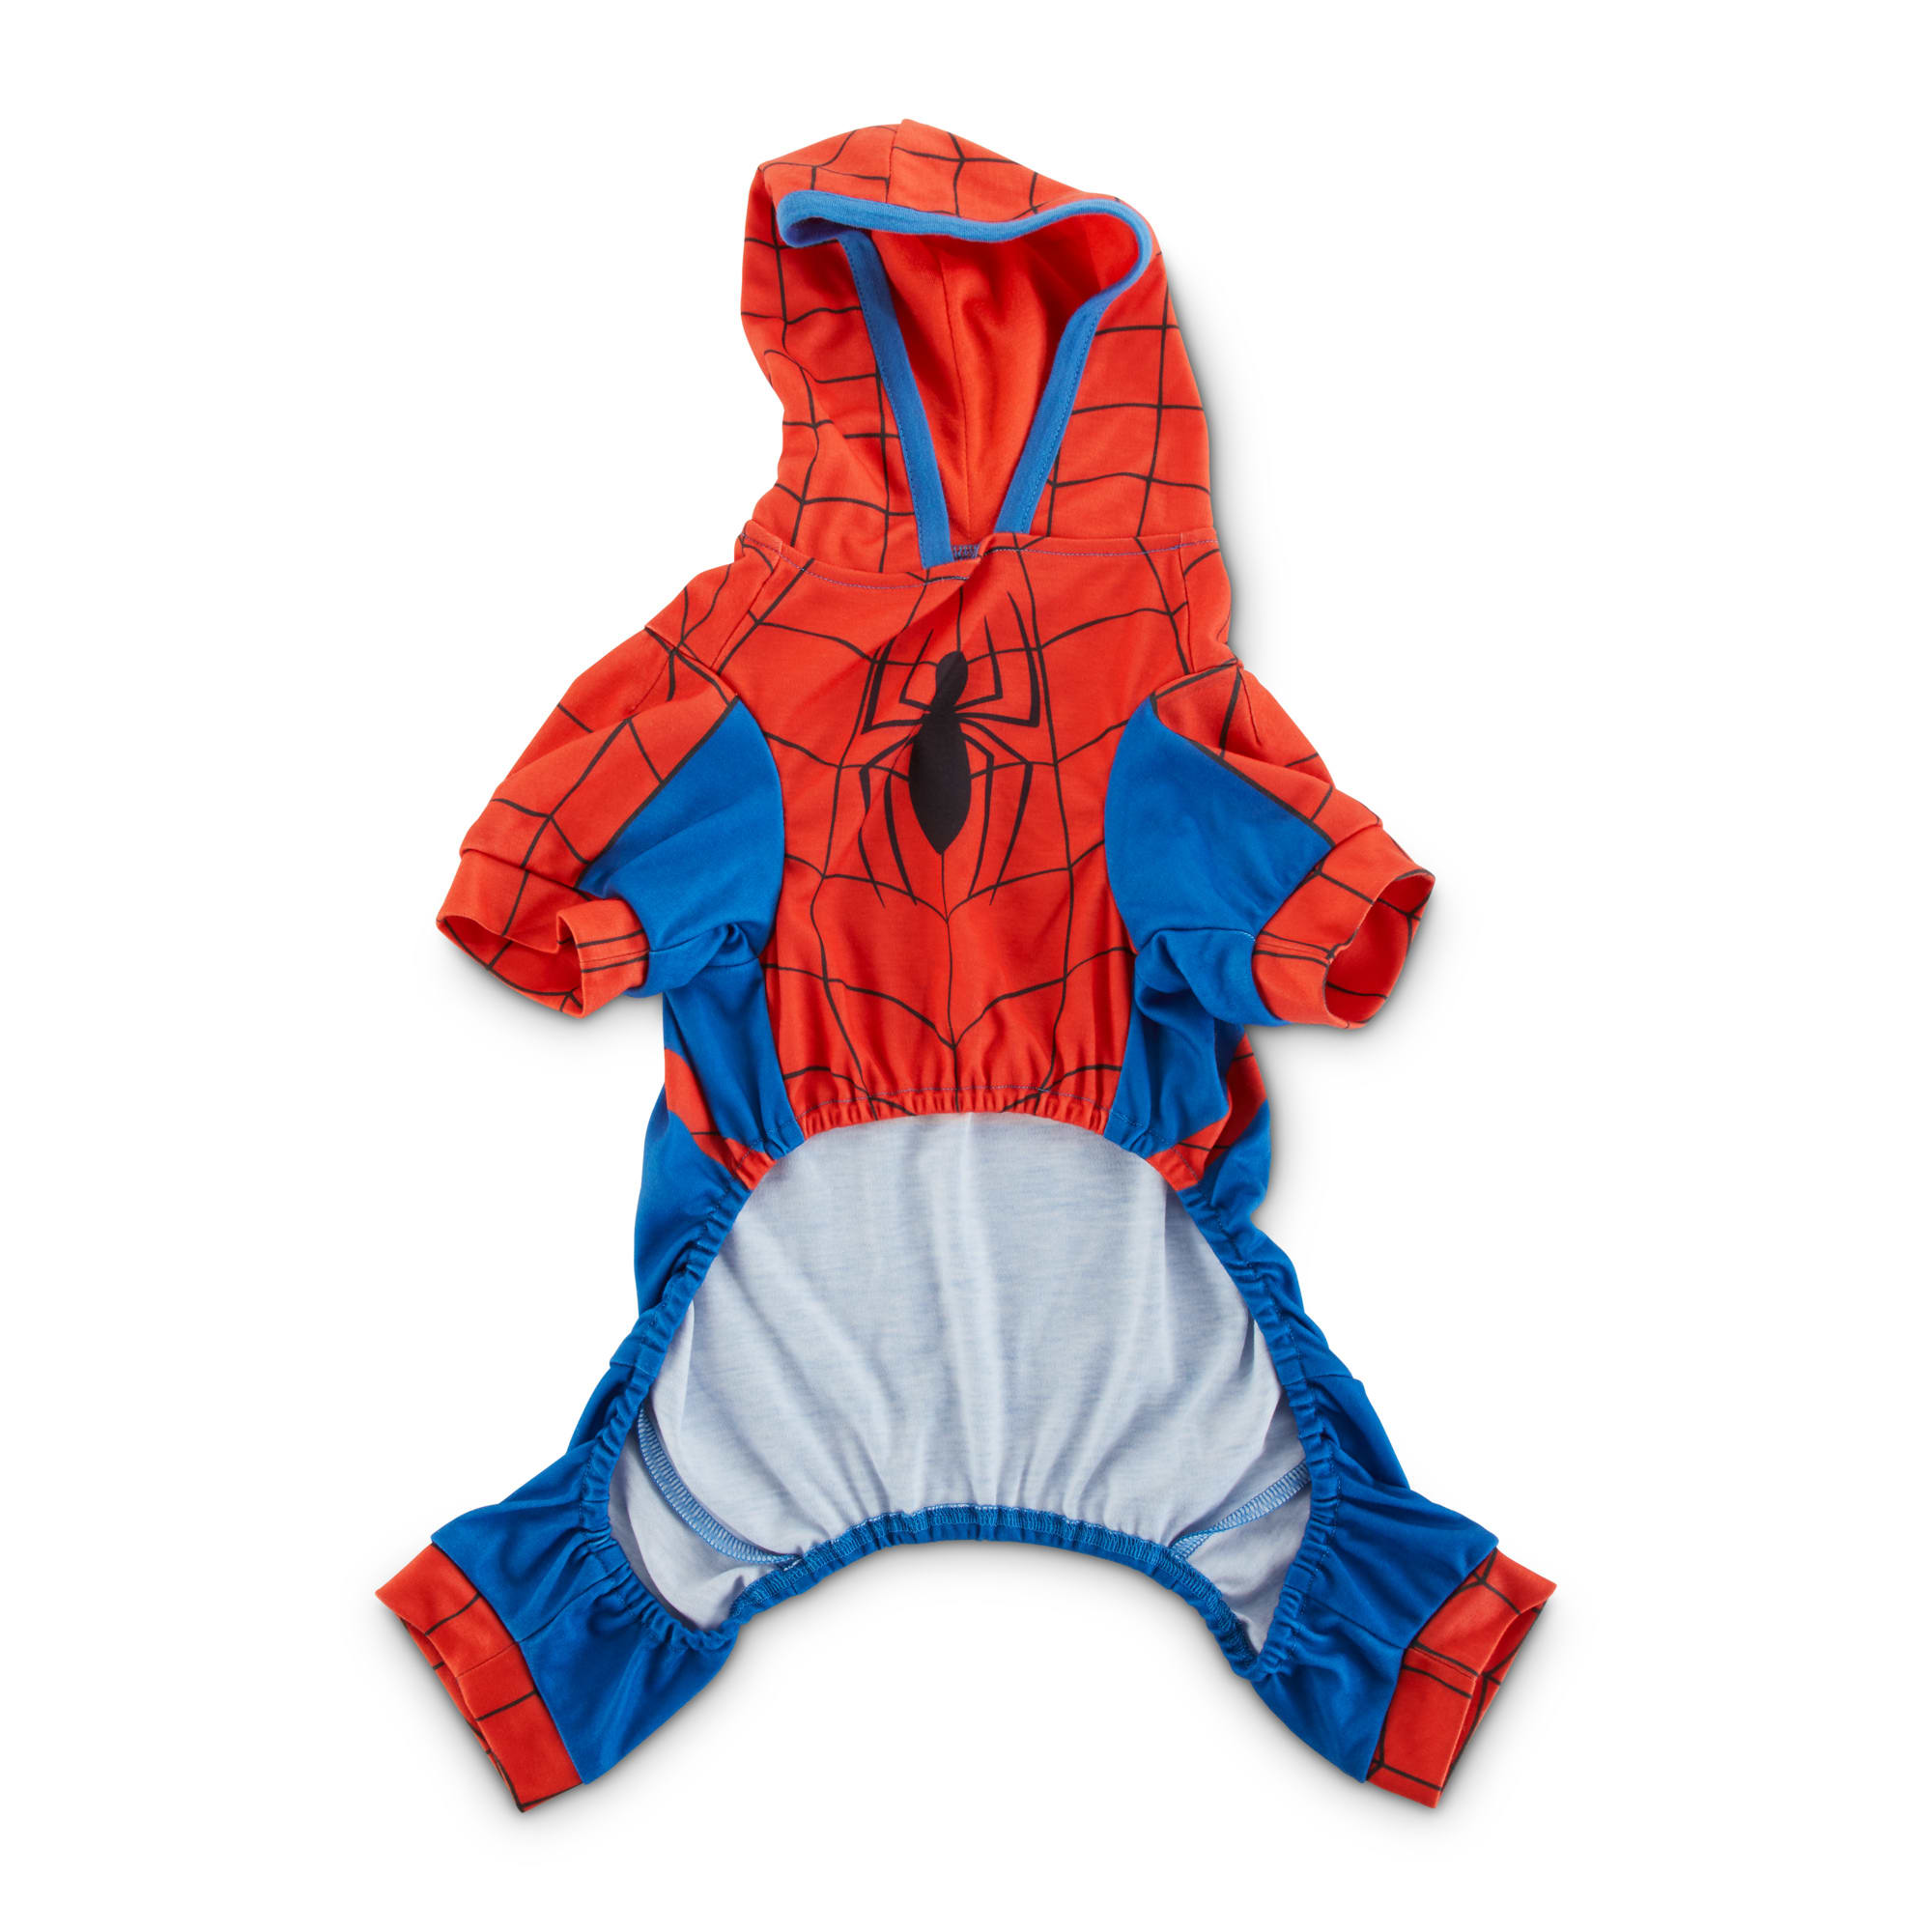 Marvel SpiderMan Dog Suit Costume eBay